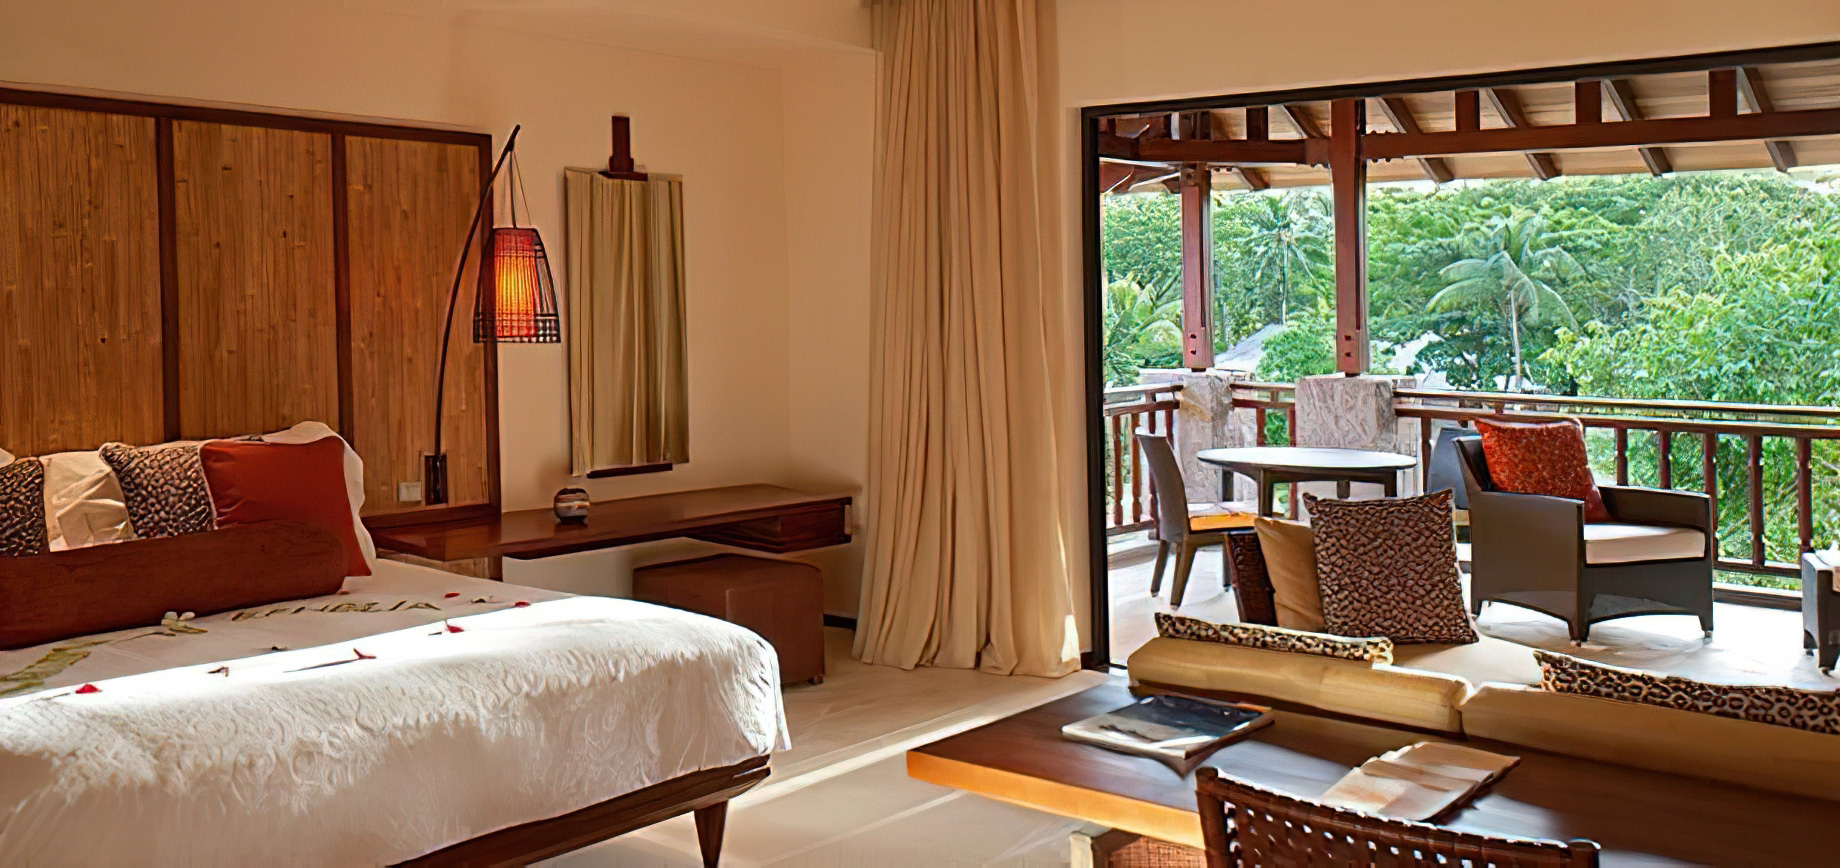 Constance Ephelia Resort - Port Launay, Mahe, Seychelles - Senior Suite Terrace View